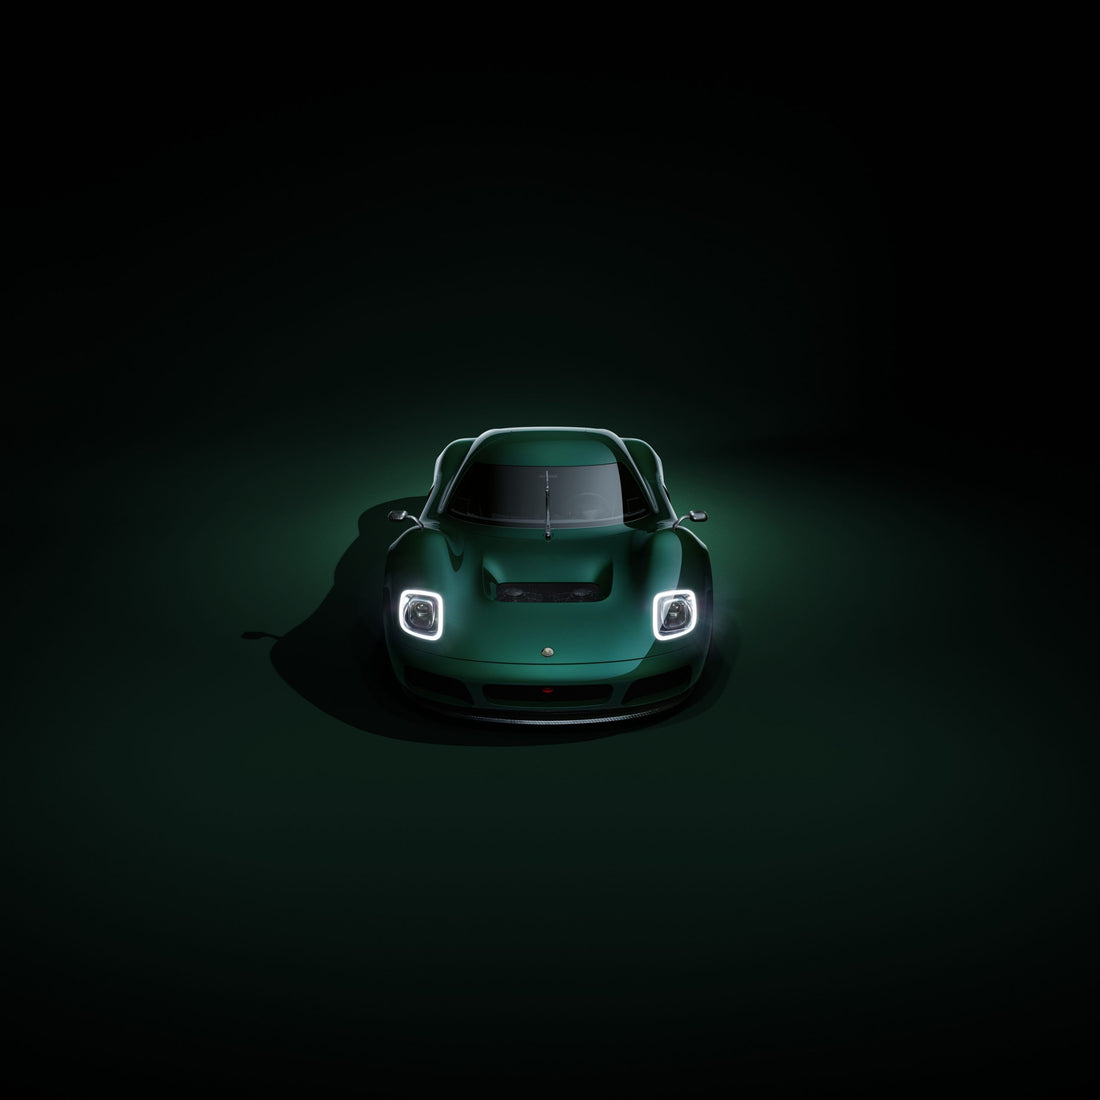 radford racing green reborn car